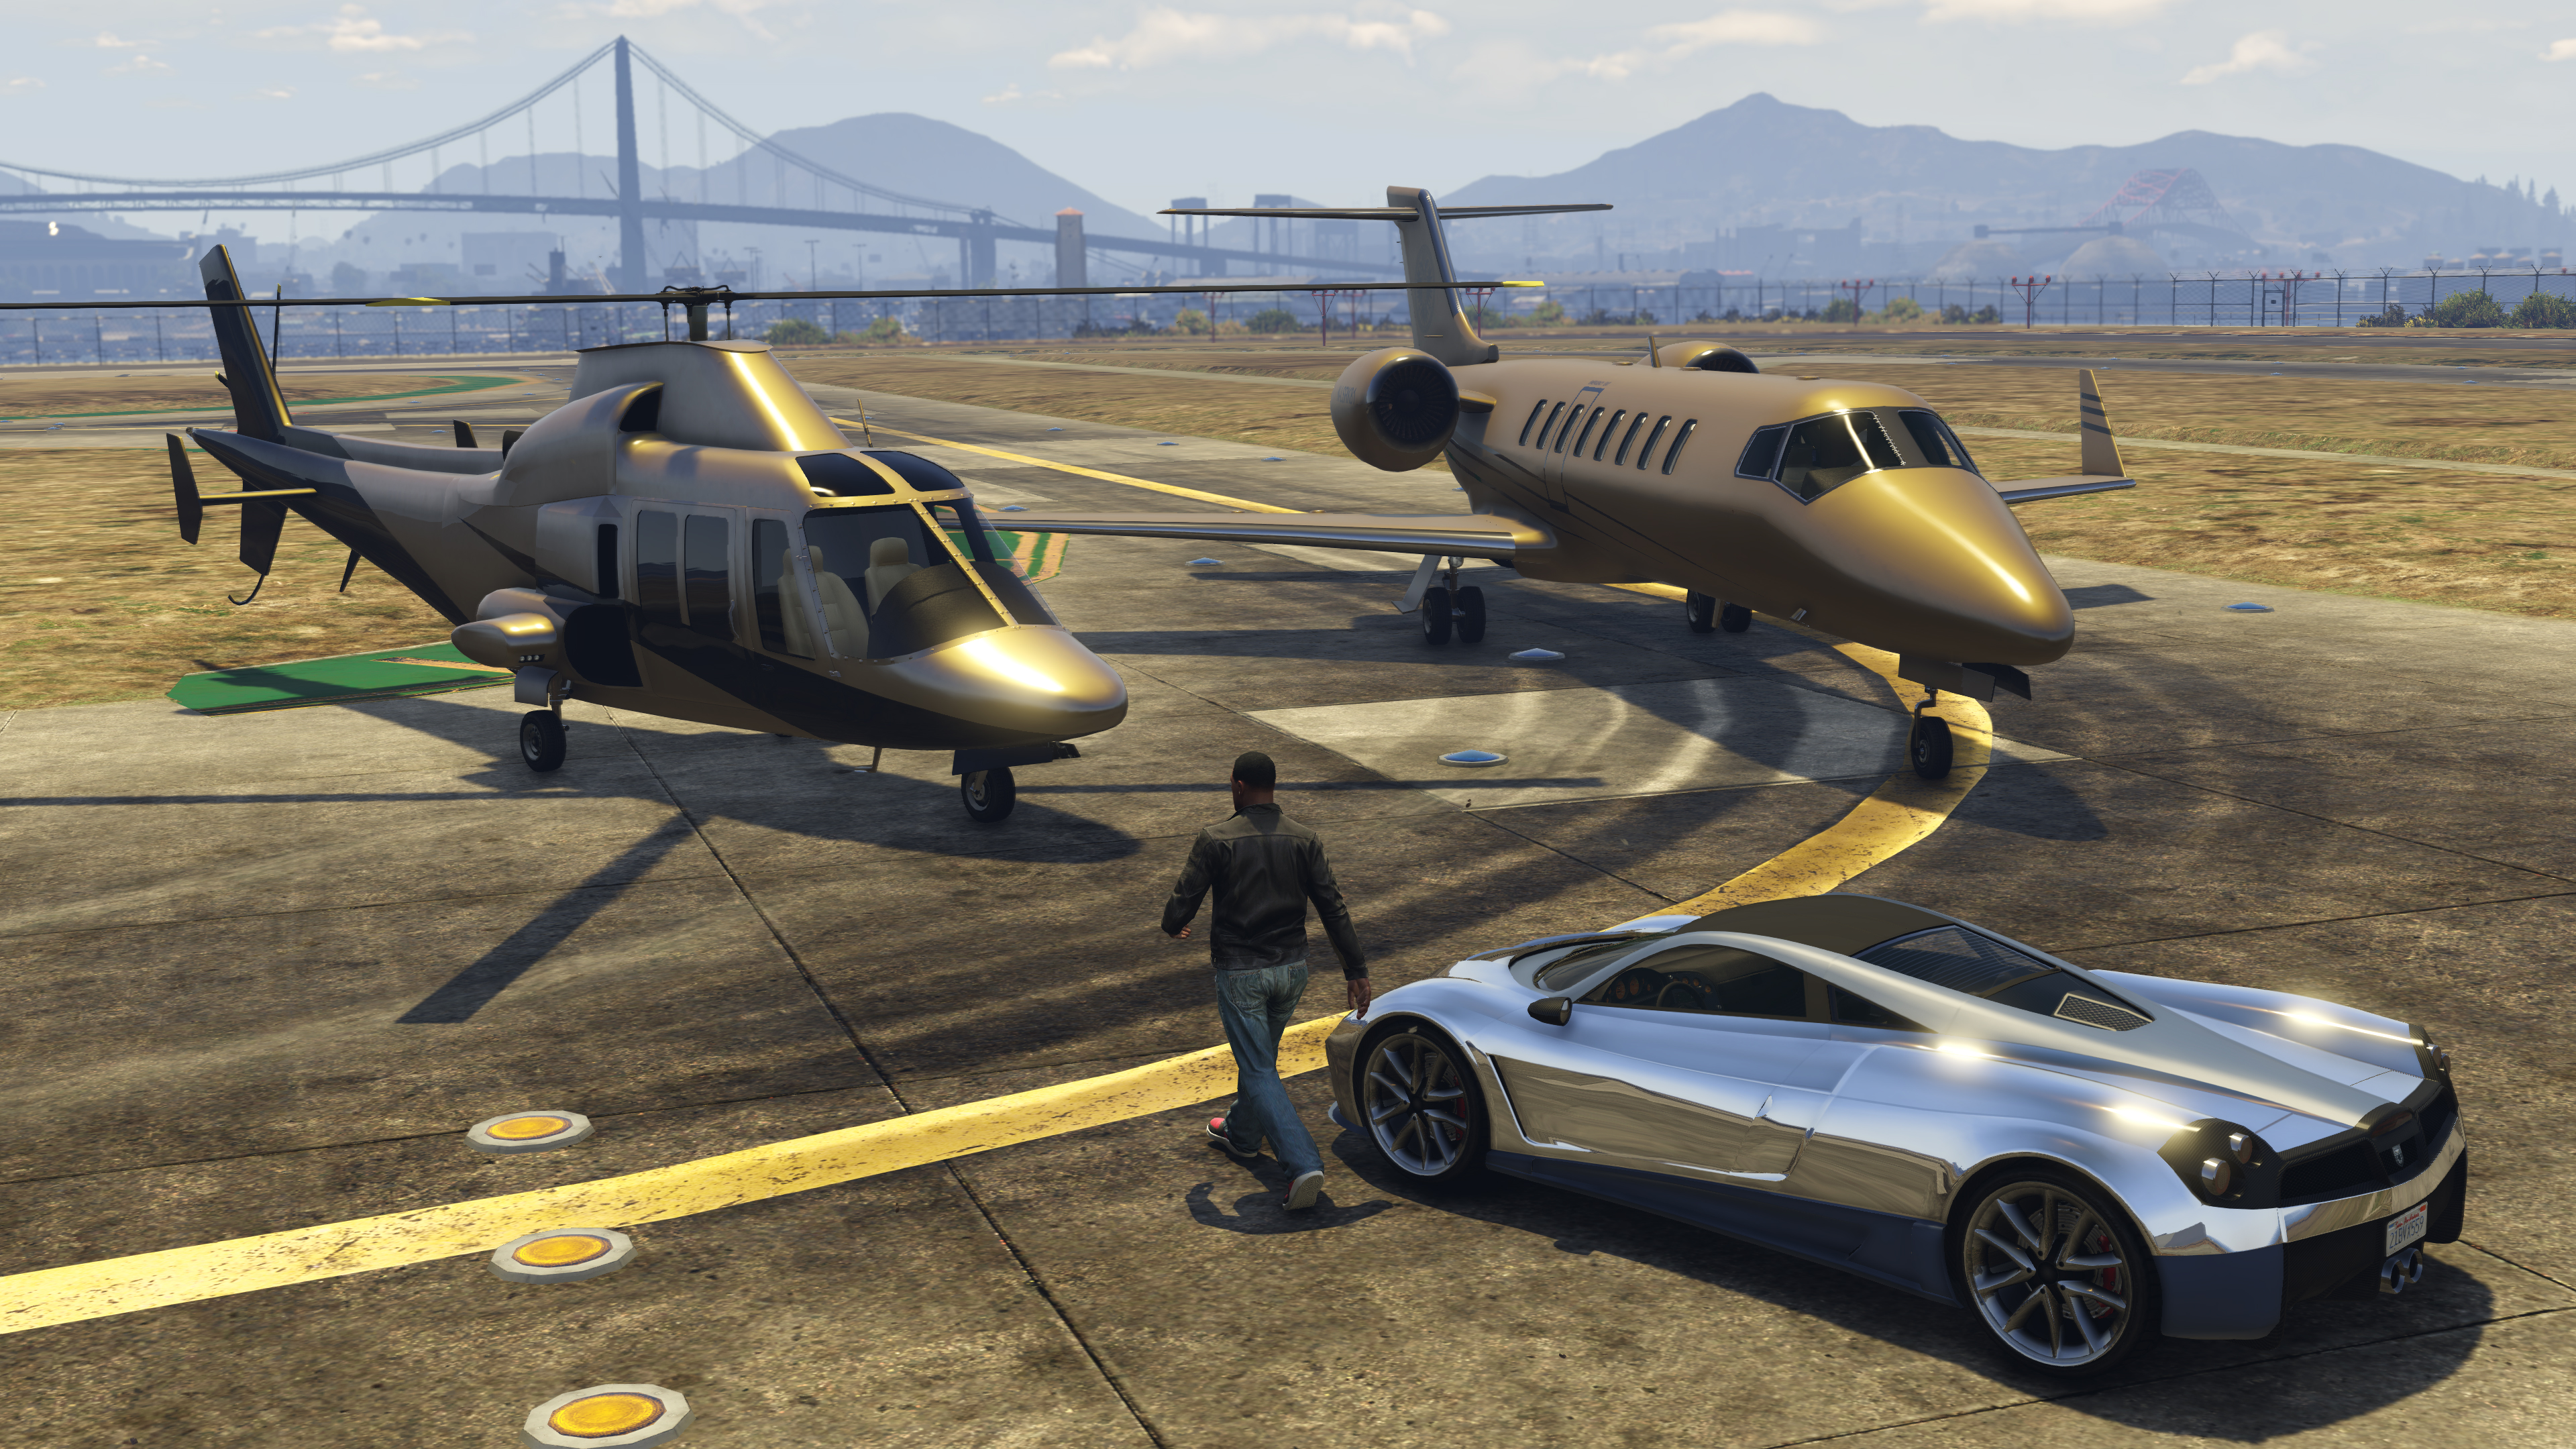 Rockstar Games deletes all Instagram posts ahead Grand Theft Auto VI (GTA  6) trailer